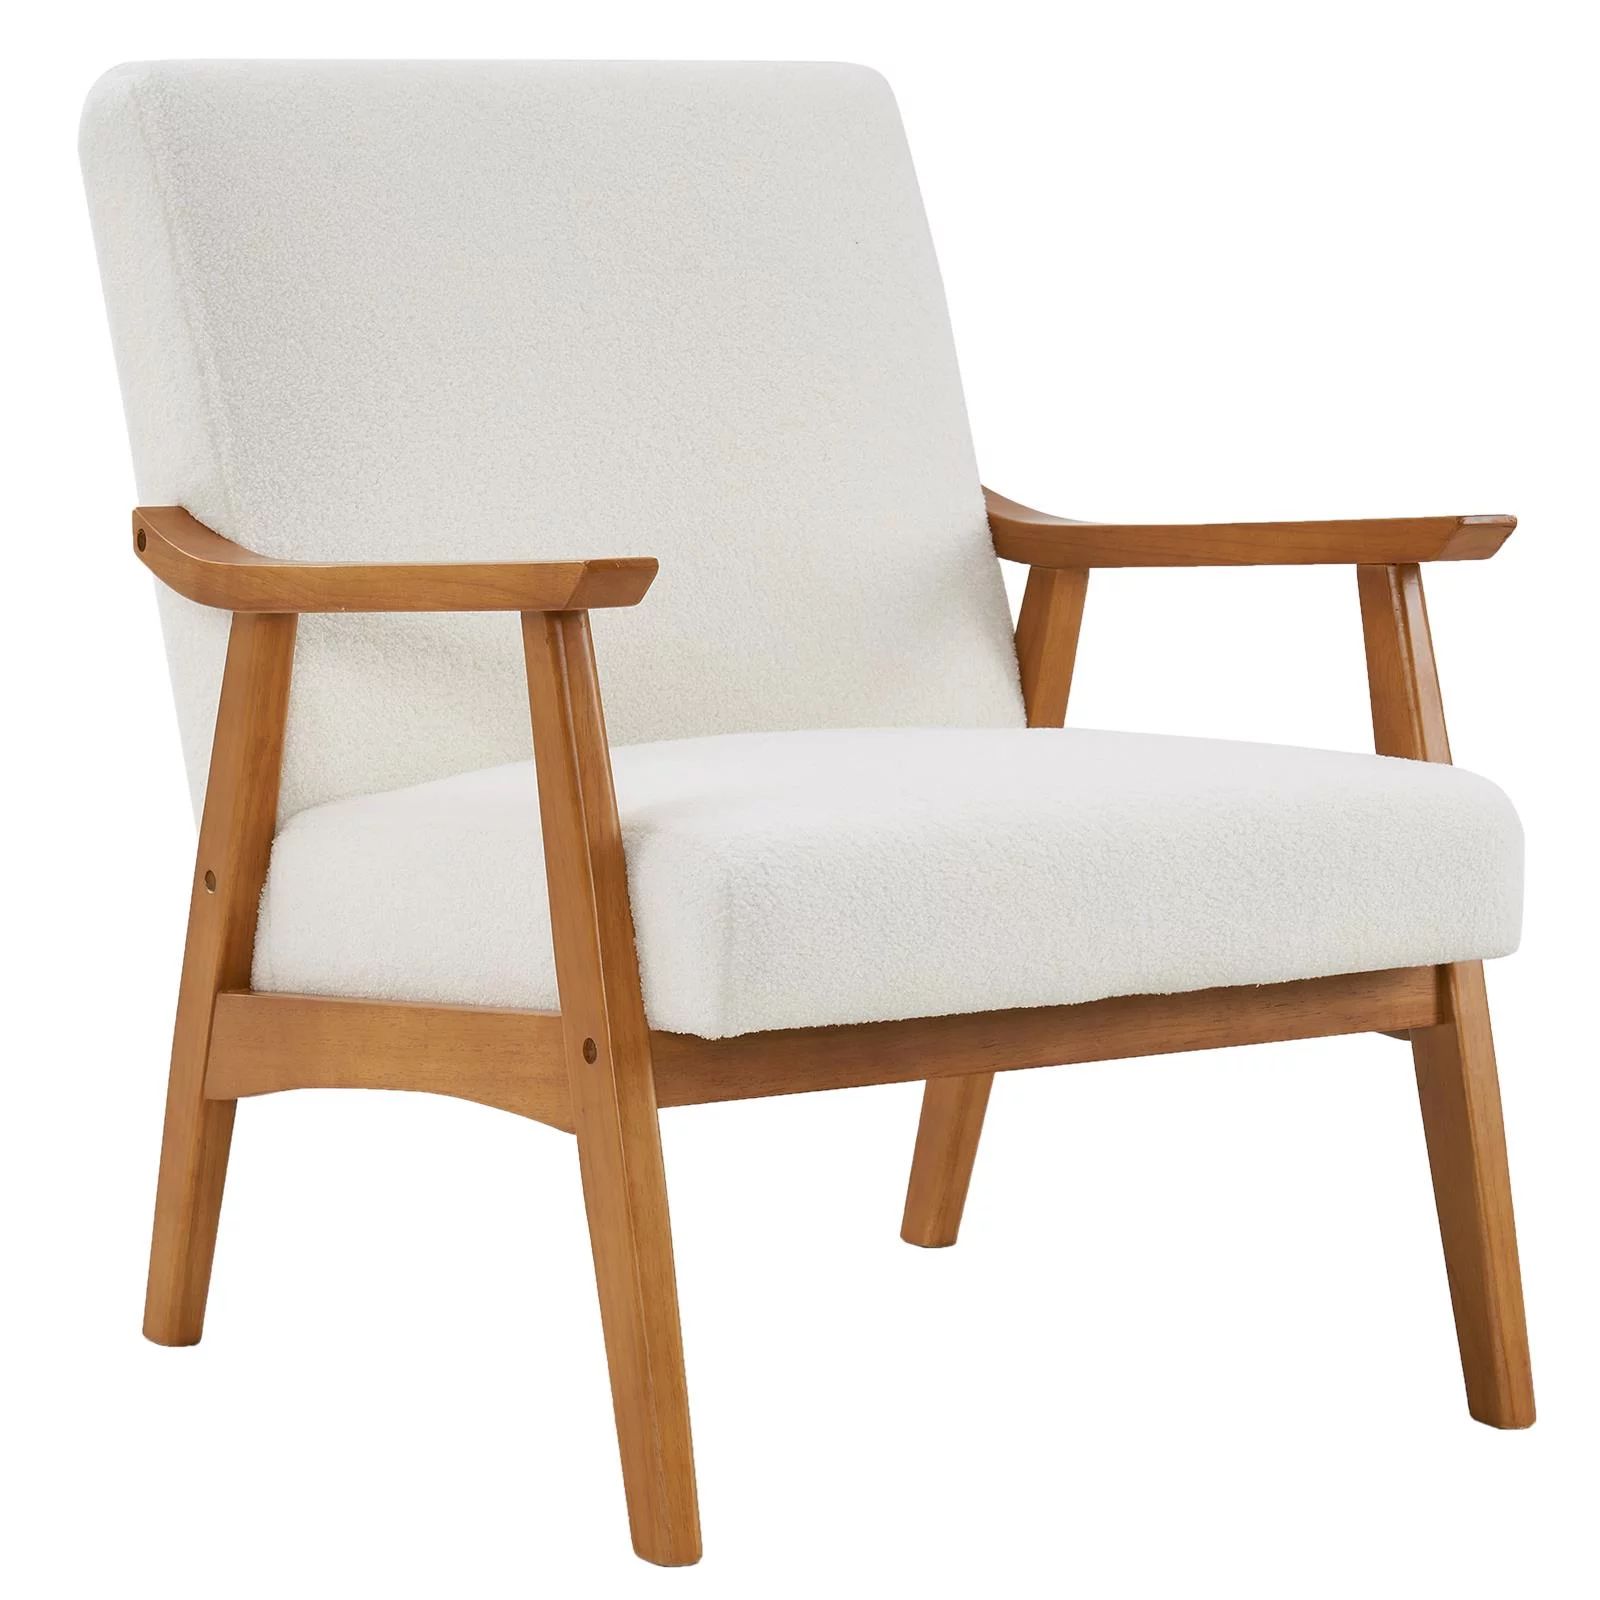 Ktaxon Mid-Century Modern Arm Chair with Solid Wood Frame,Teddy Velvet Fabric Club Chair,Beige | Walmart (US)